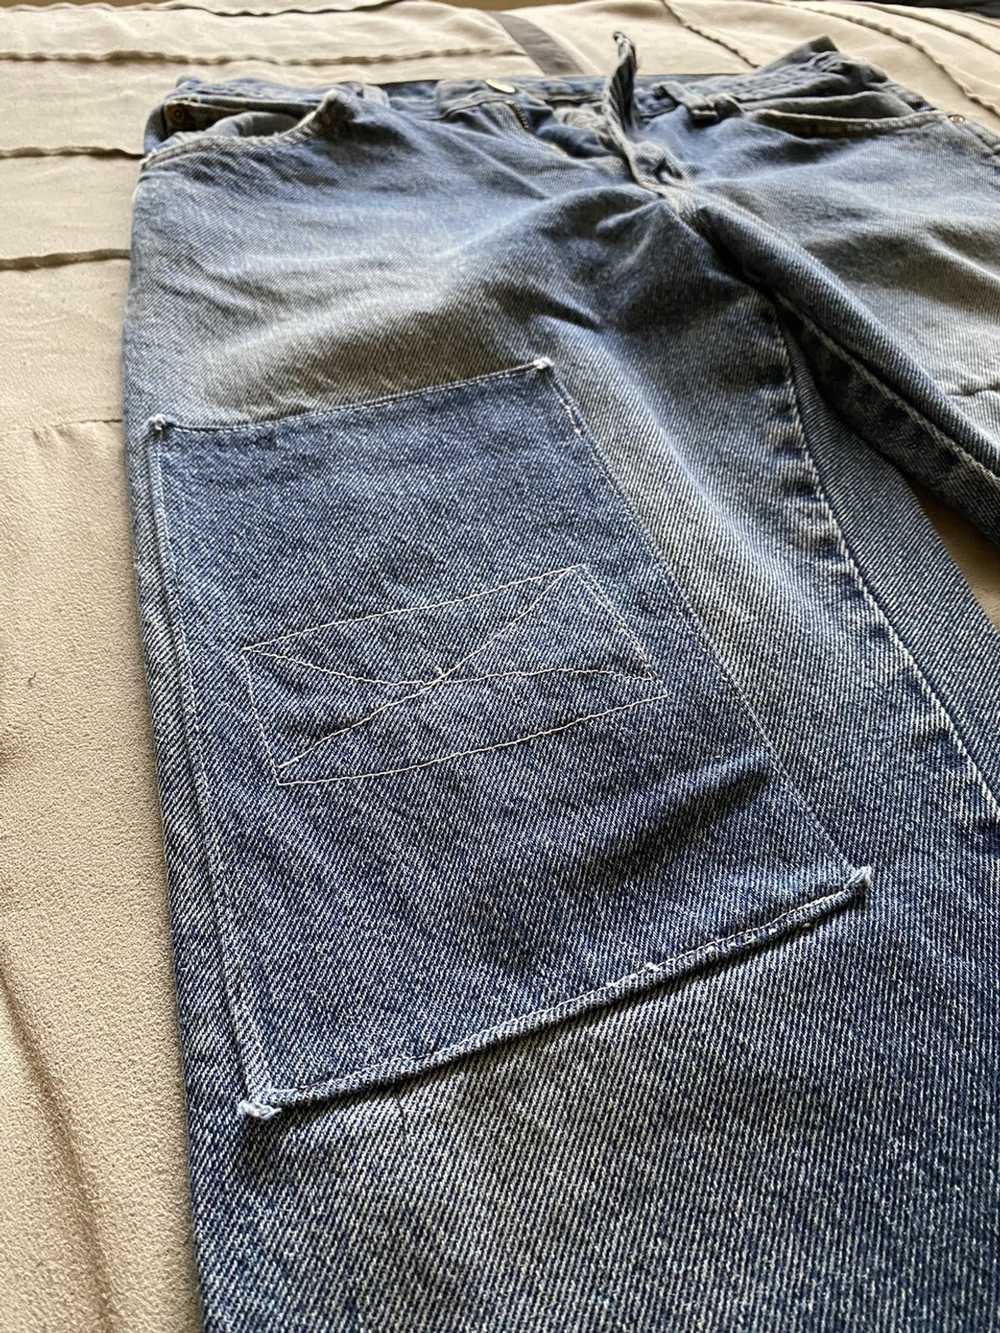 Wrangler Custom Wrangler Patchwork Denim Jeans - image 3